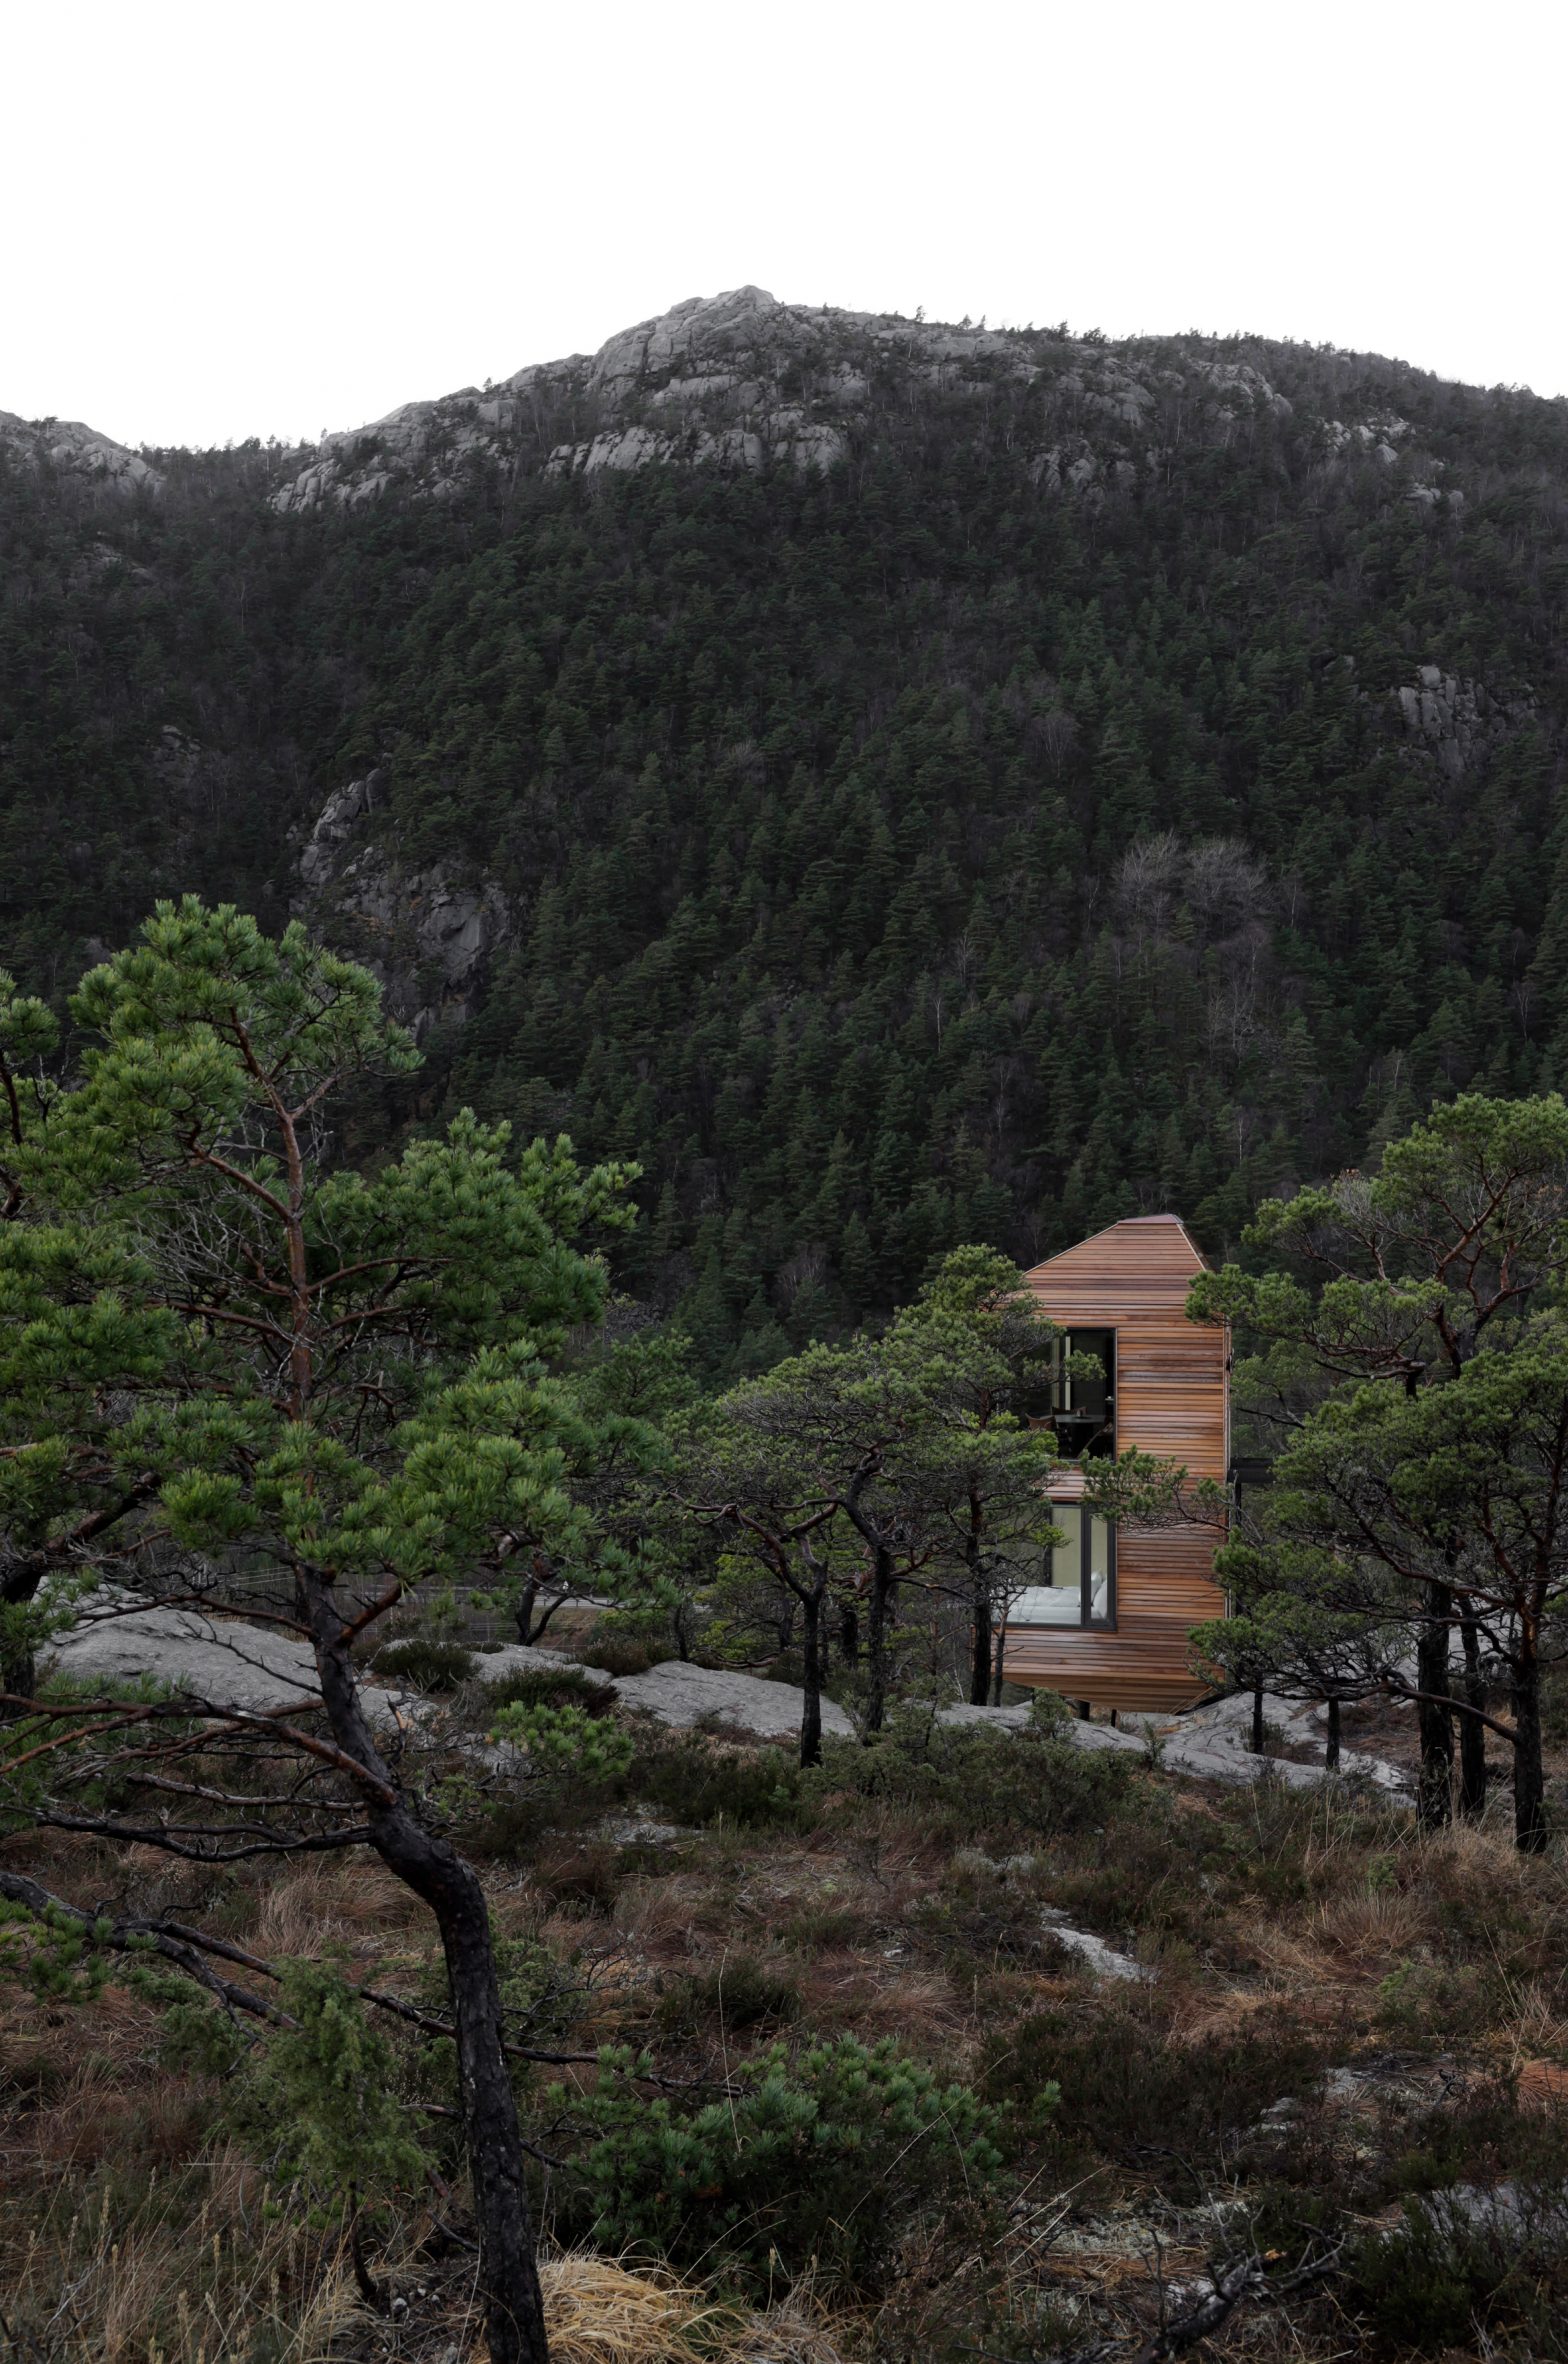 Wooden cabin in rural Norwegian landscape